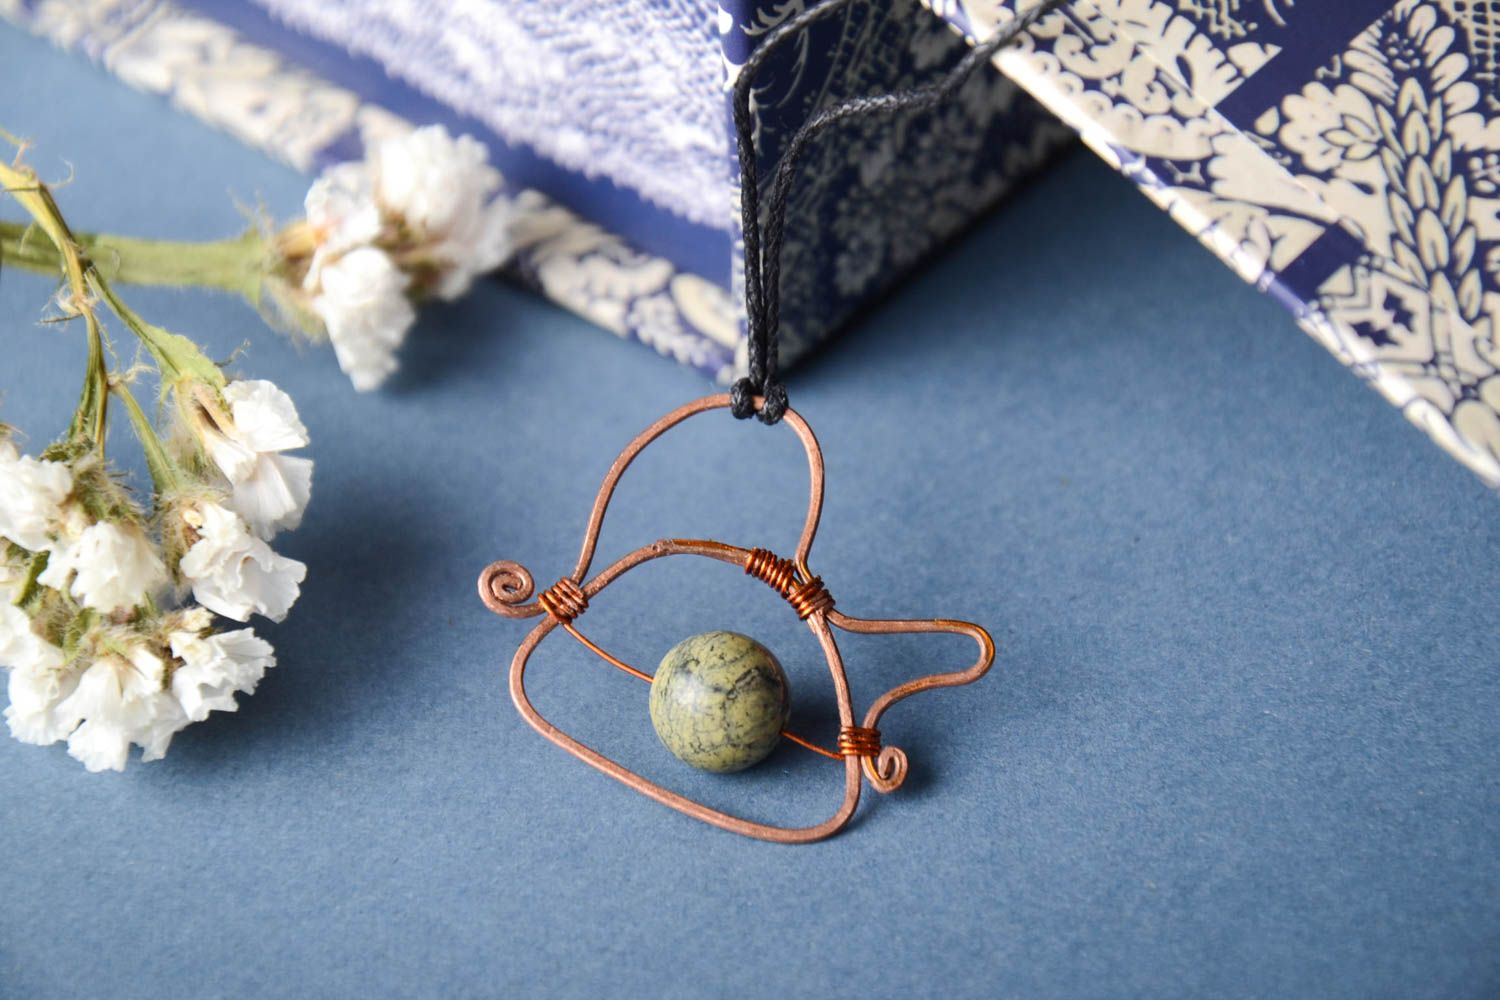 Handmade pendant unusual pendant metal pendant gift ideas designer jewelry photo 1